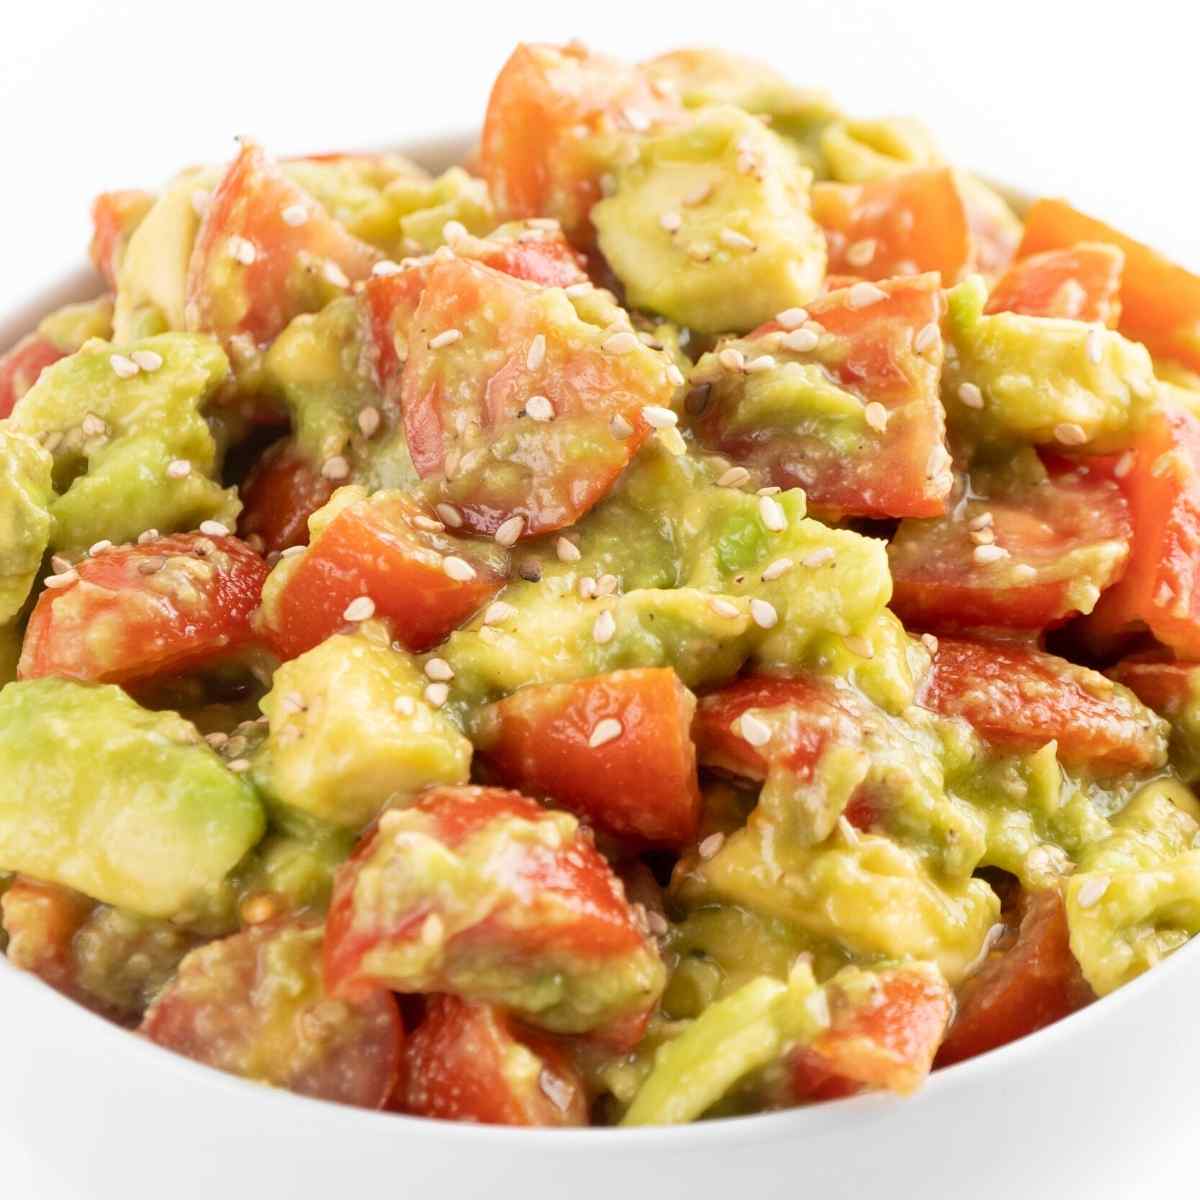 Schneller Keto Avocado-Tomaten-Salat als einfacher ketogener Snack ohne Kohlenhydrate Mobile Featured Image